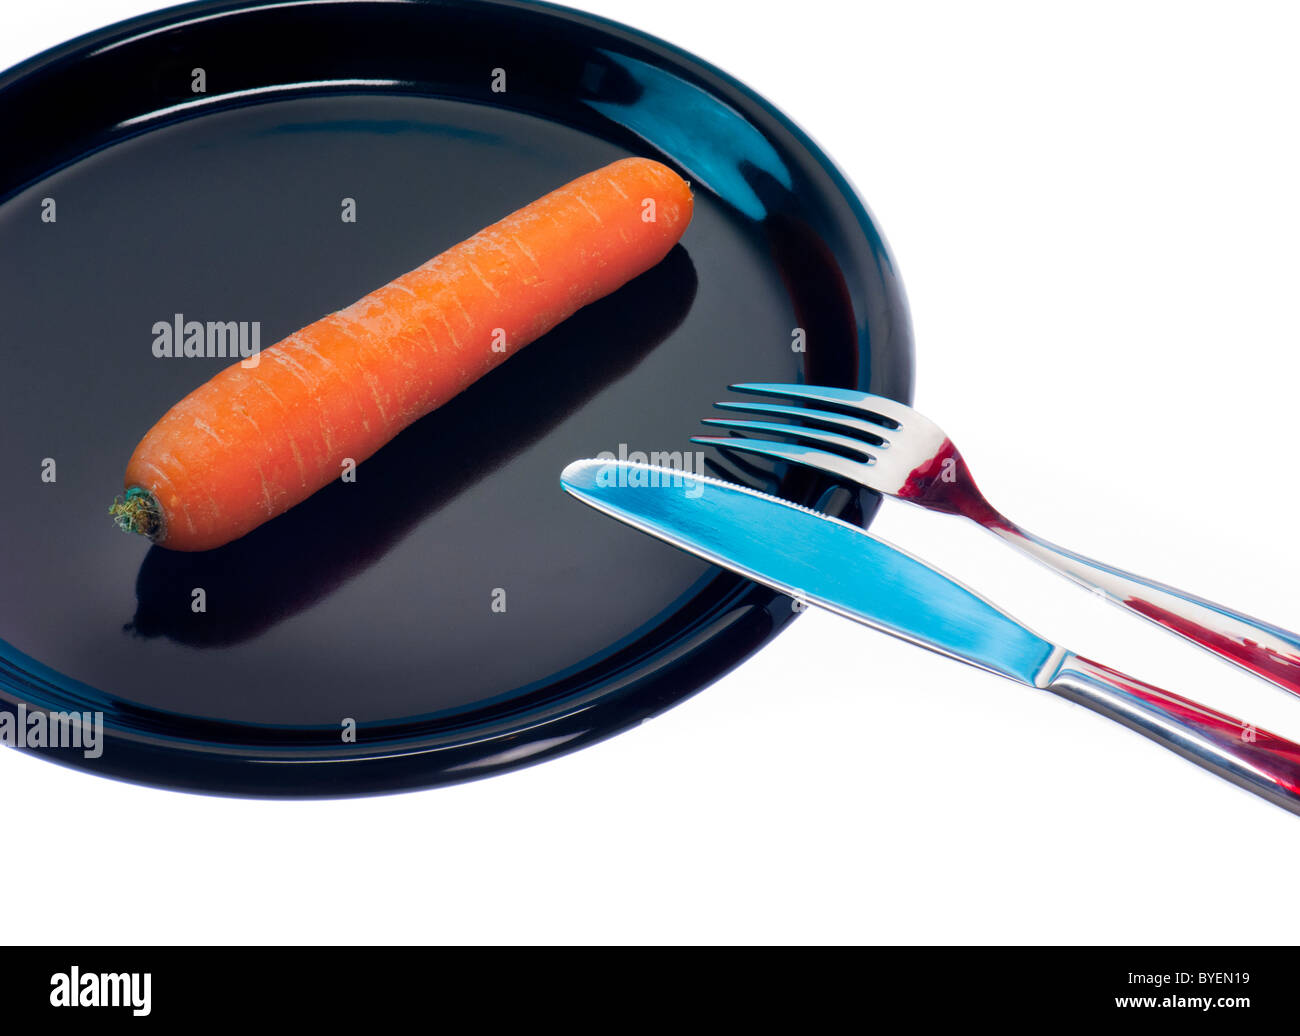 symbol eat less Carrot Diet low fat no fatness slim black plate veggi vegetables fork knife tablett symbolic Decreasing Stock Photo